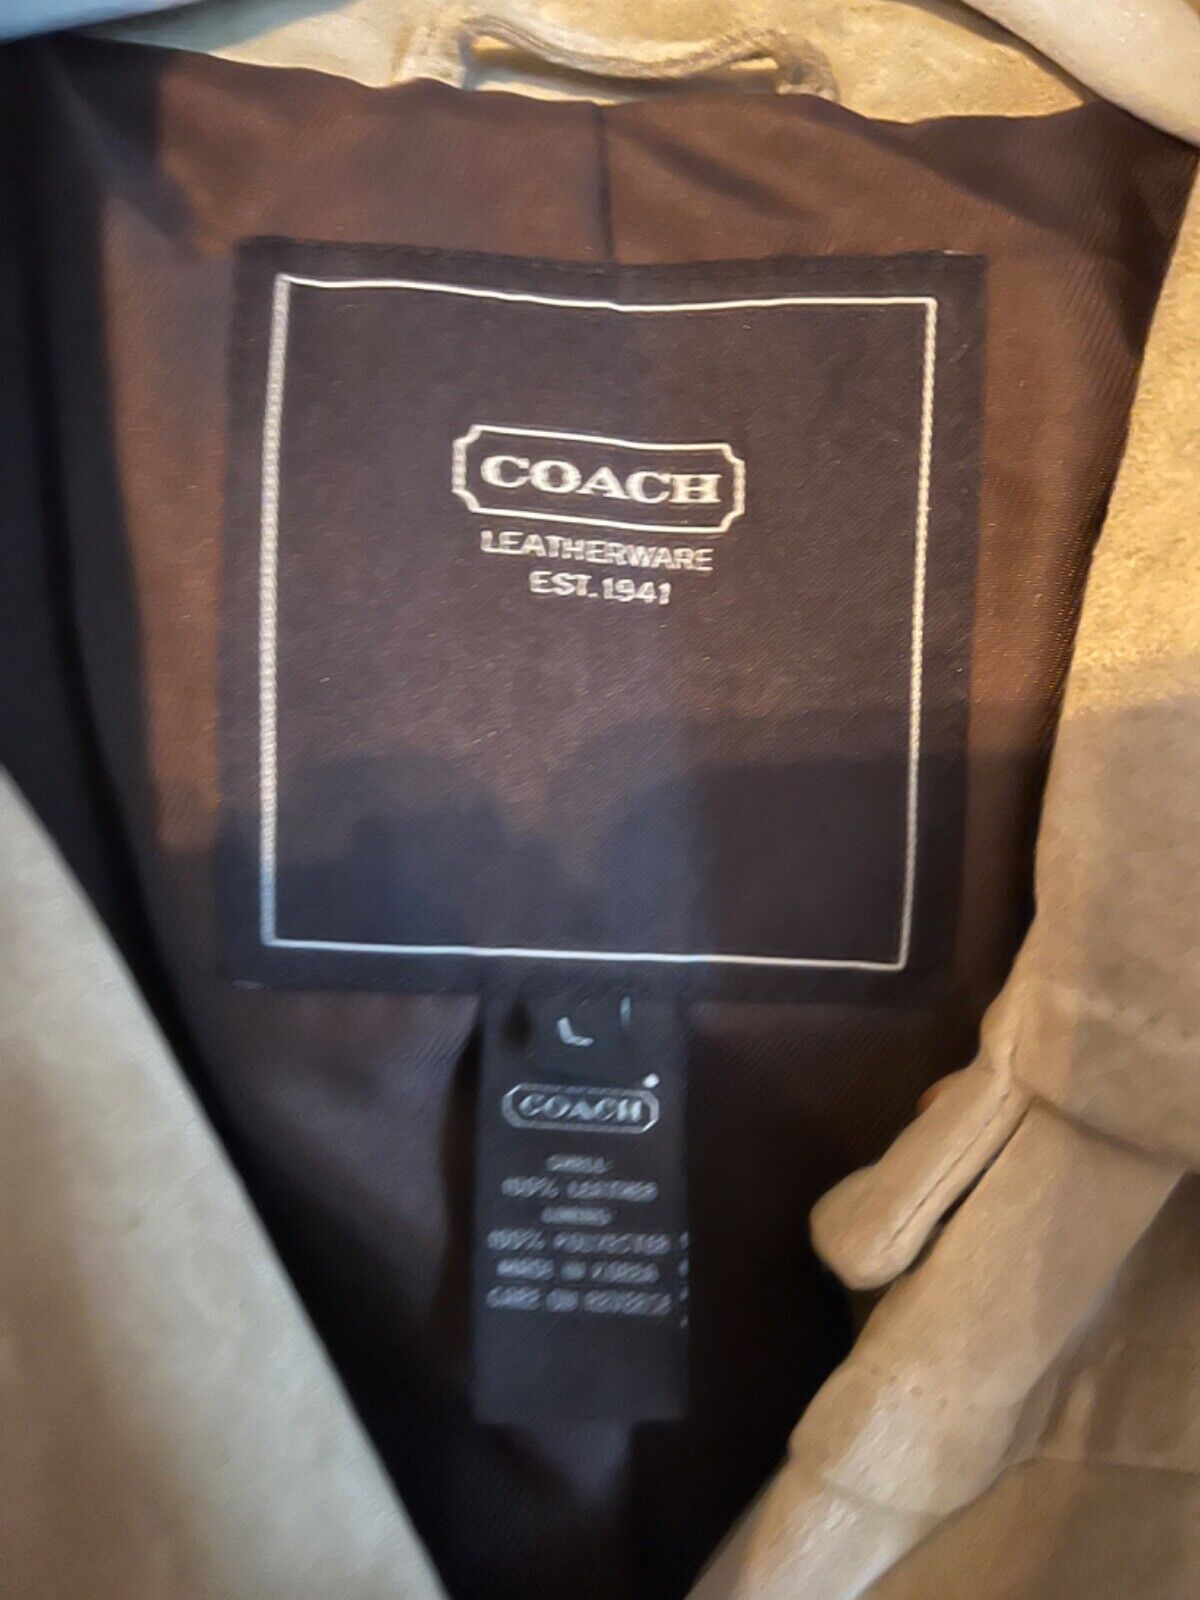 Coach leather coat | eBay